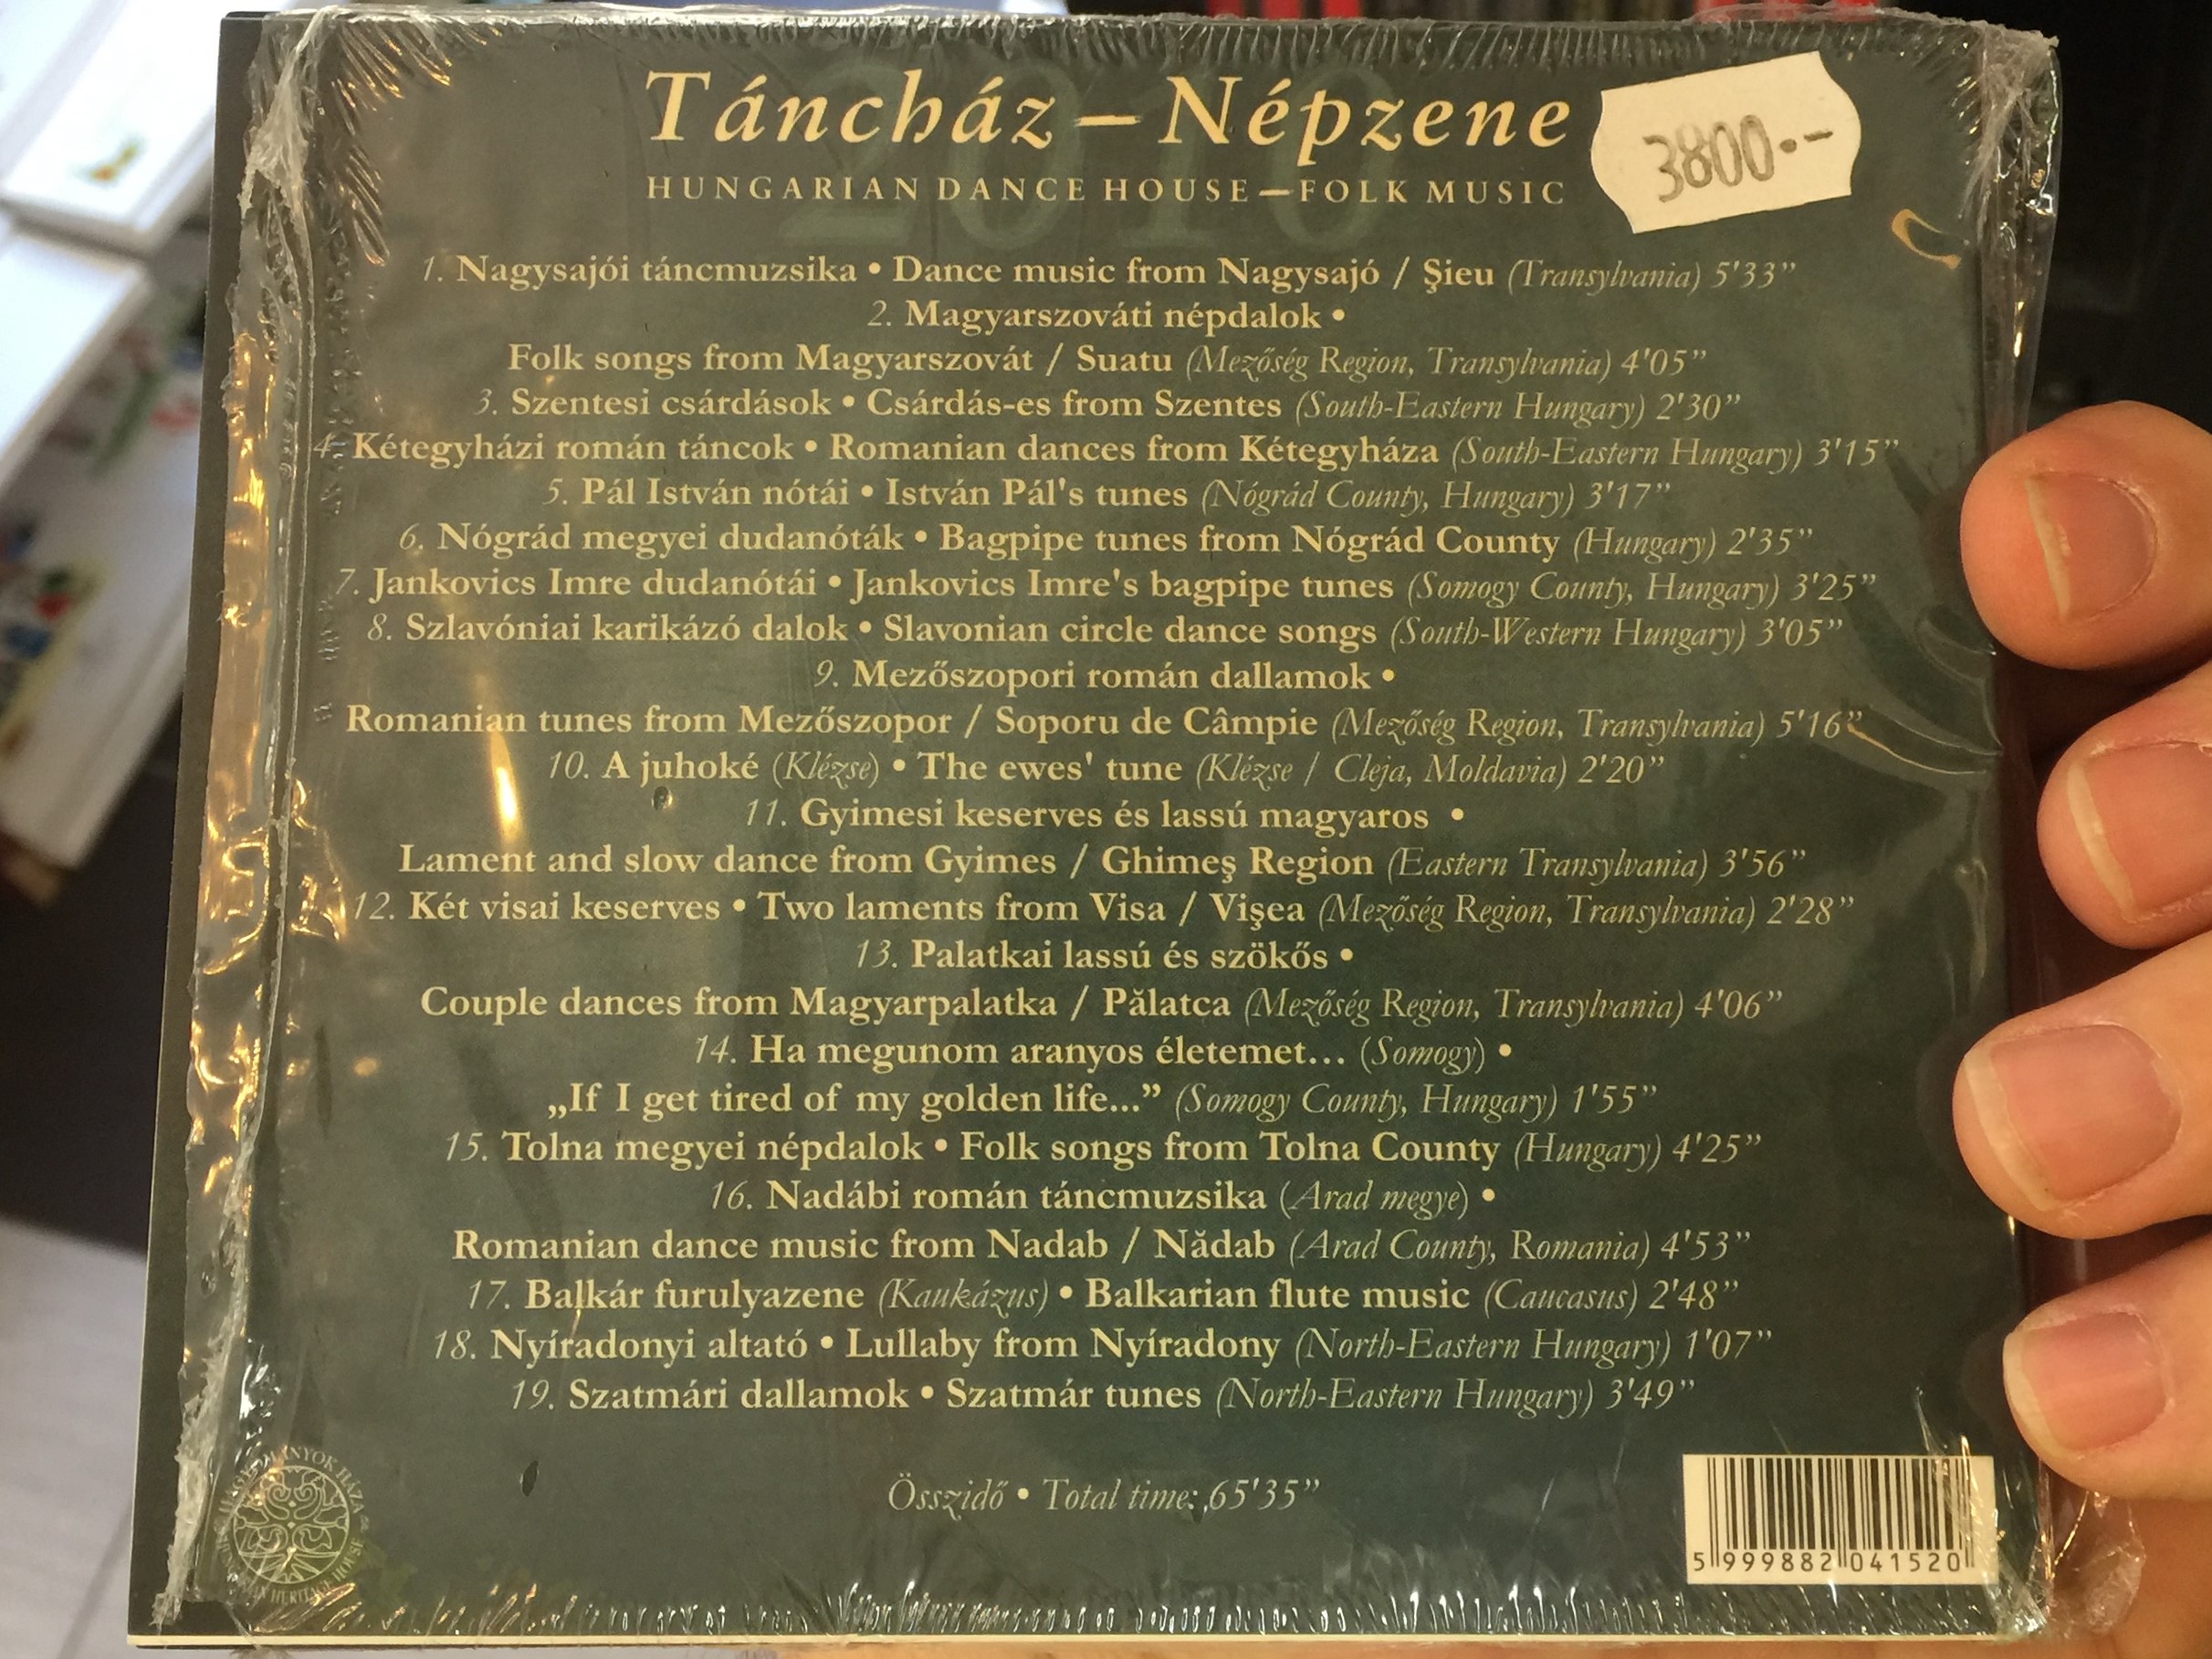 t-nch-z-n-pzene-2010-hungarian-dance-house-folk-music-hagyom-nyok-h-za-audio-cd-2010-5999882041520-2-.jpg